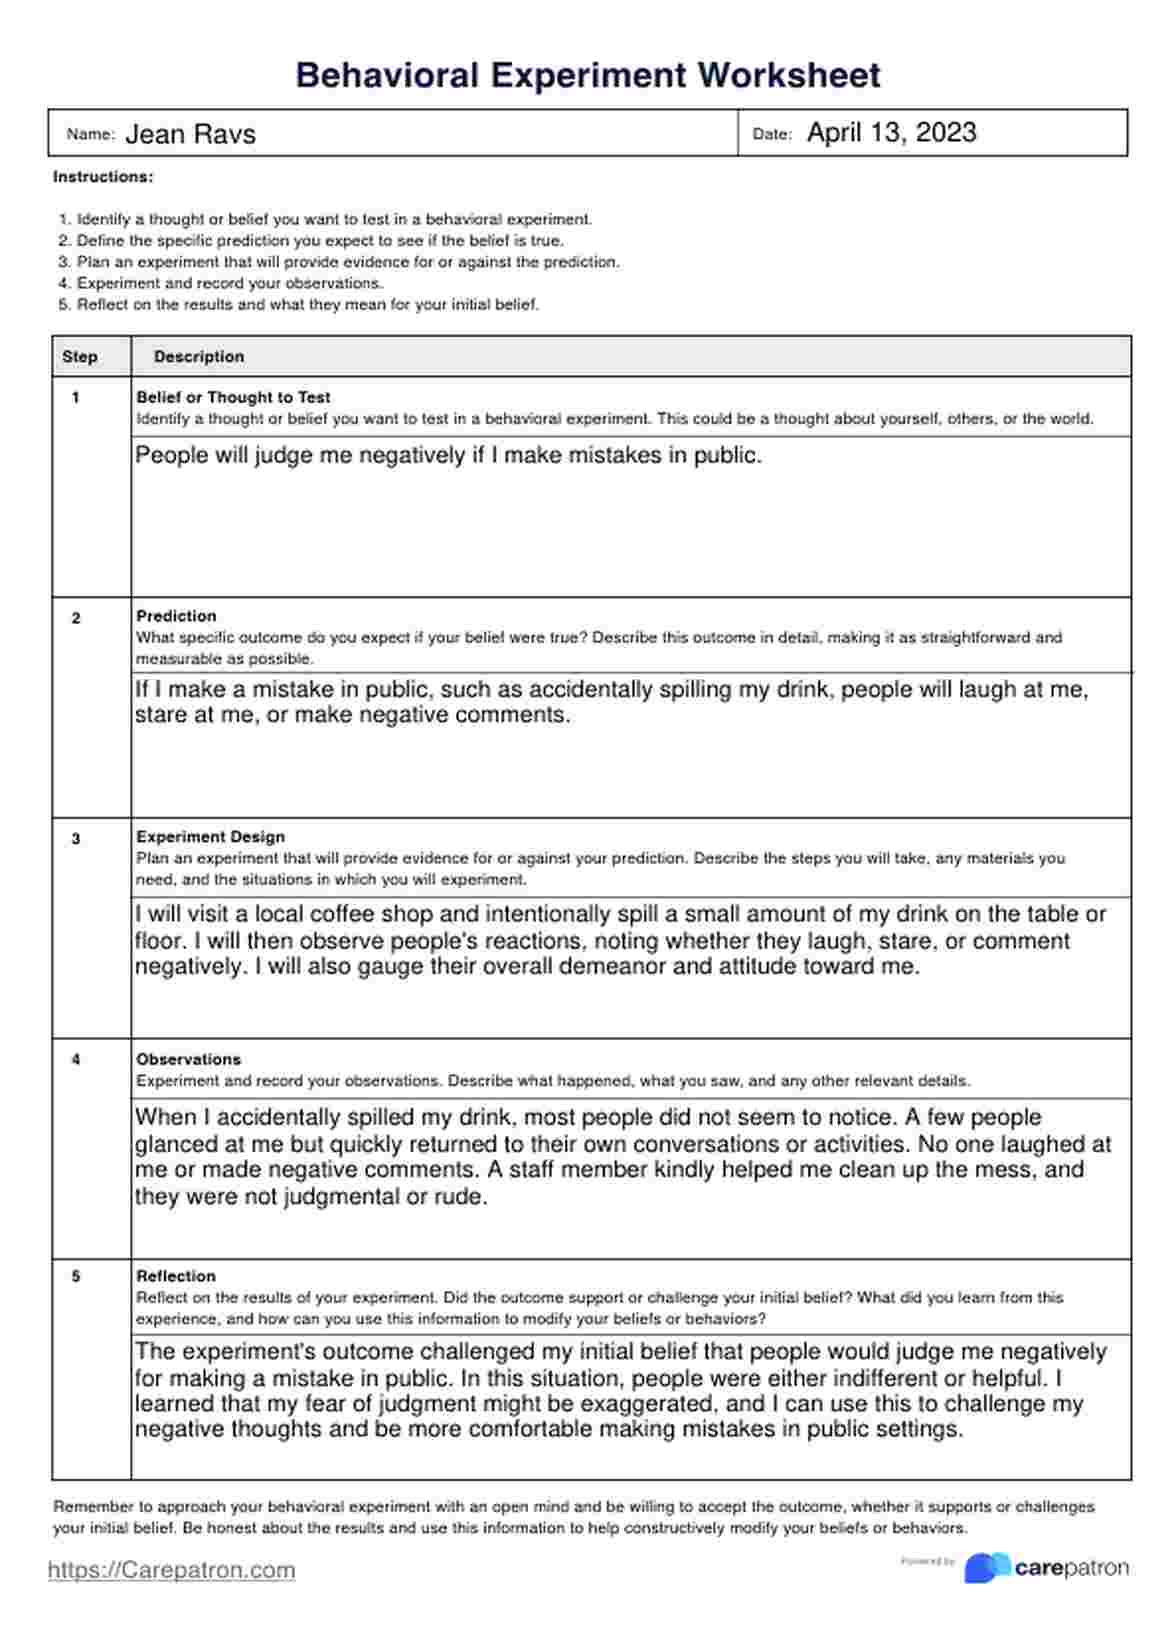 Behavioral Experiment Worksheet PDF Example